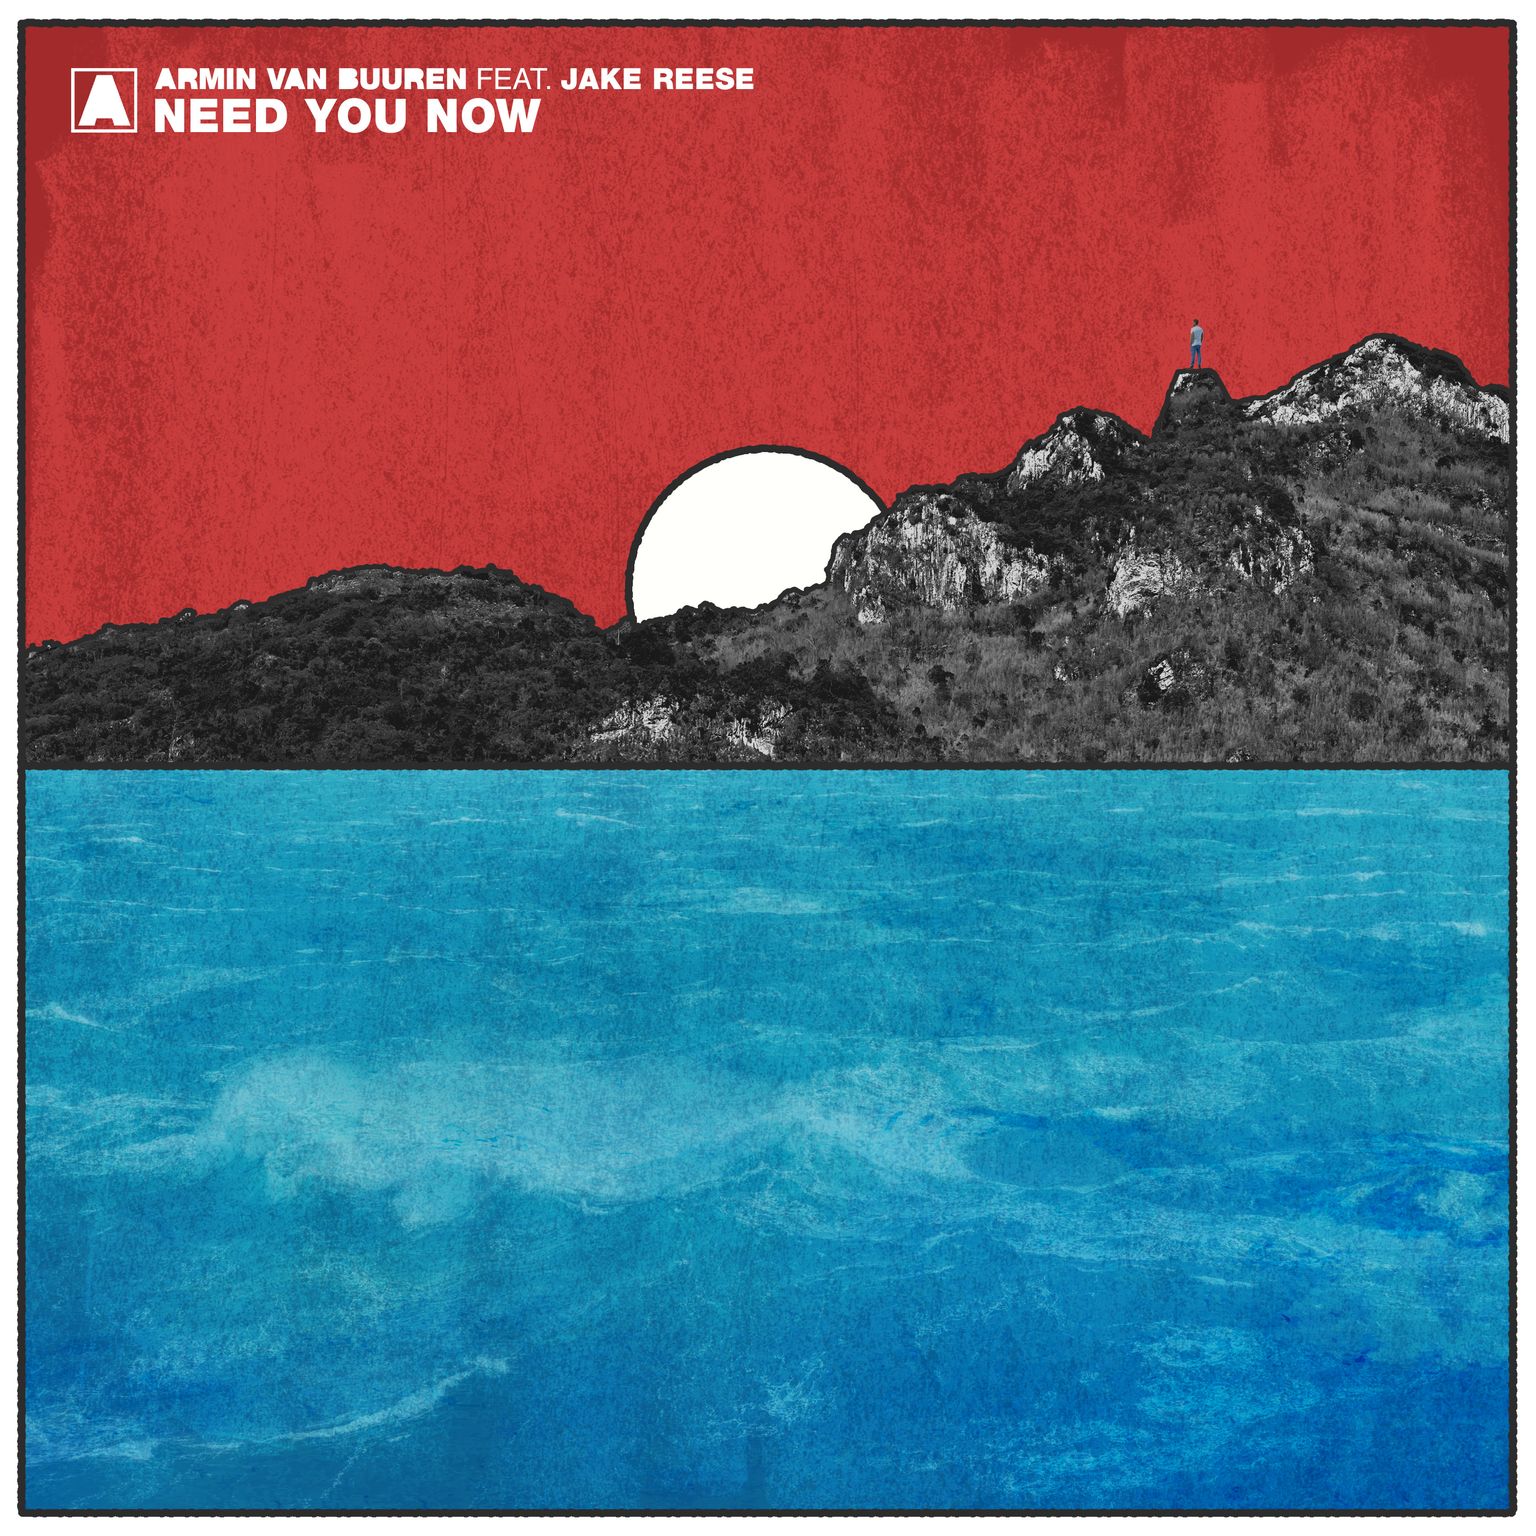 Armin van Buuren feat. Jake Reese presents Need You Now on Armada Music